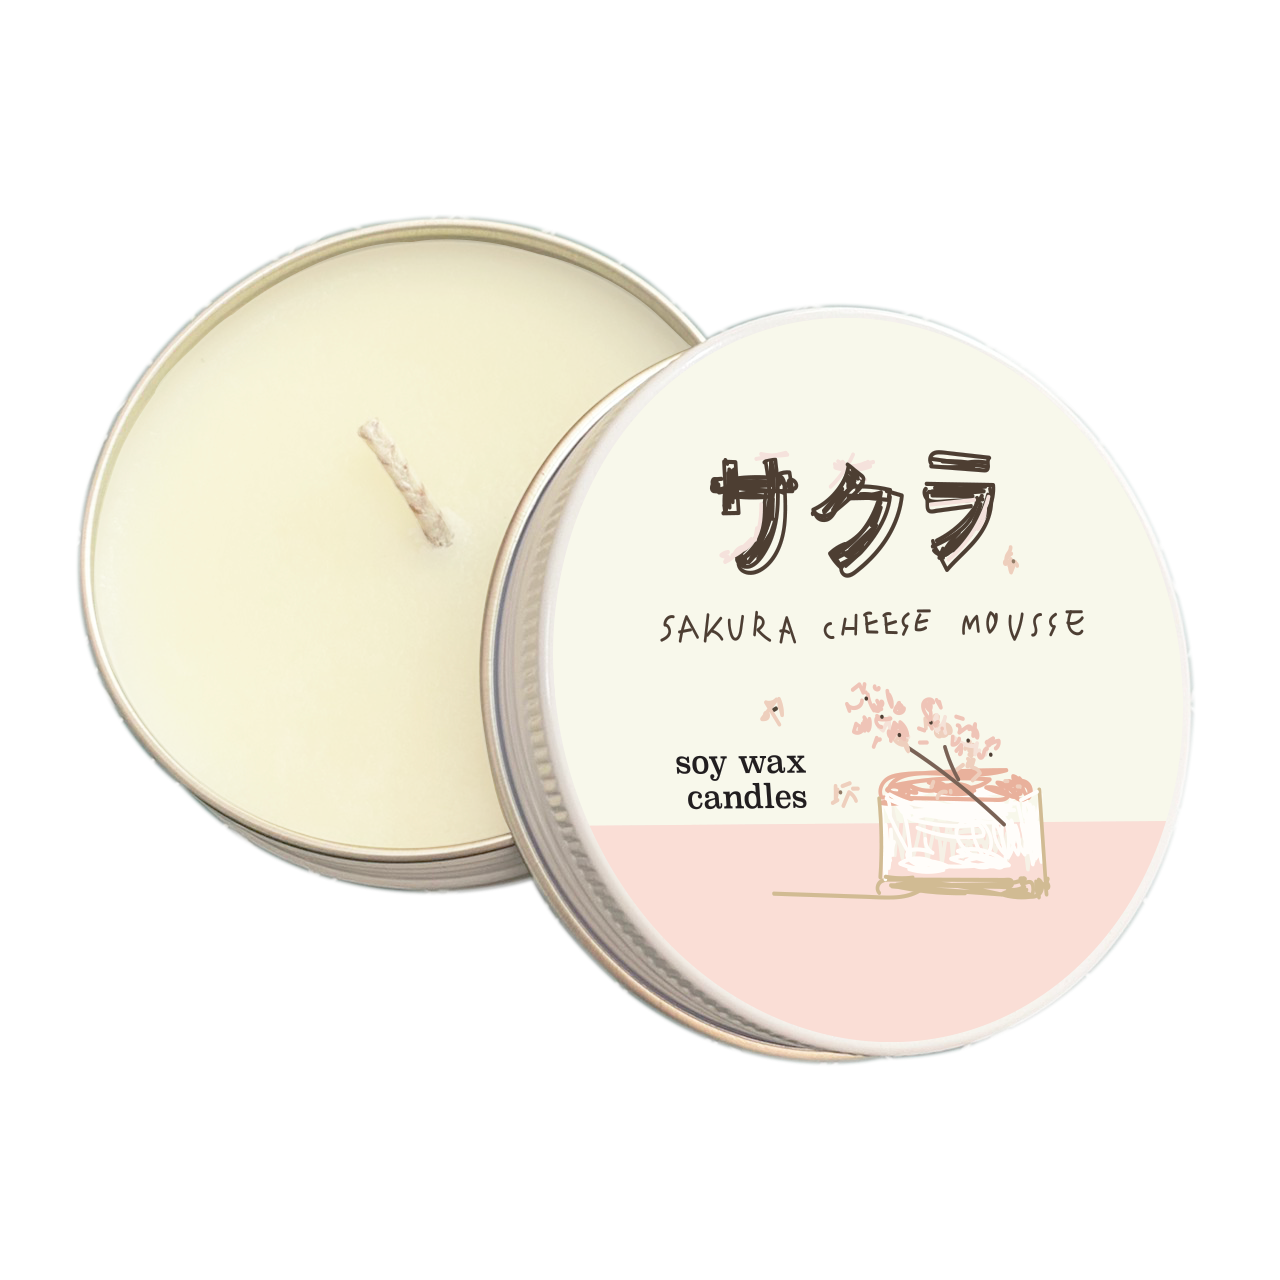 Sakura Cheese Mousse Candles